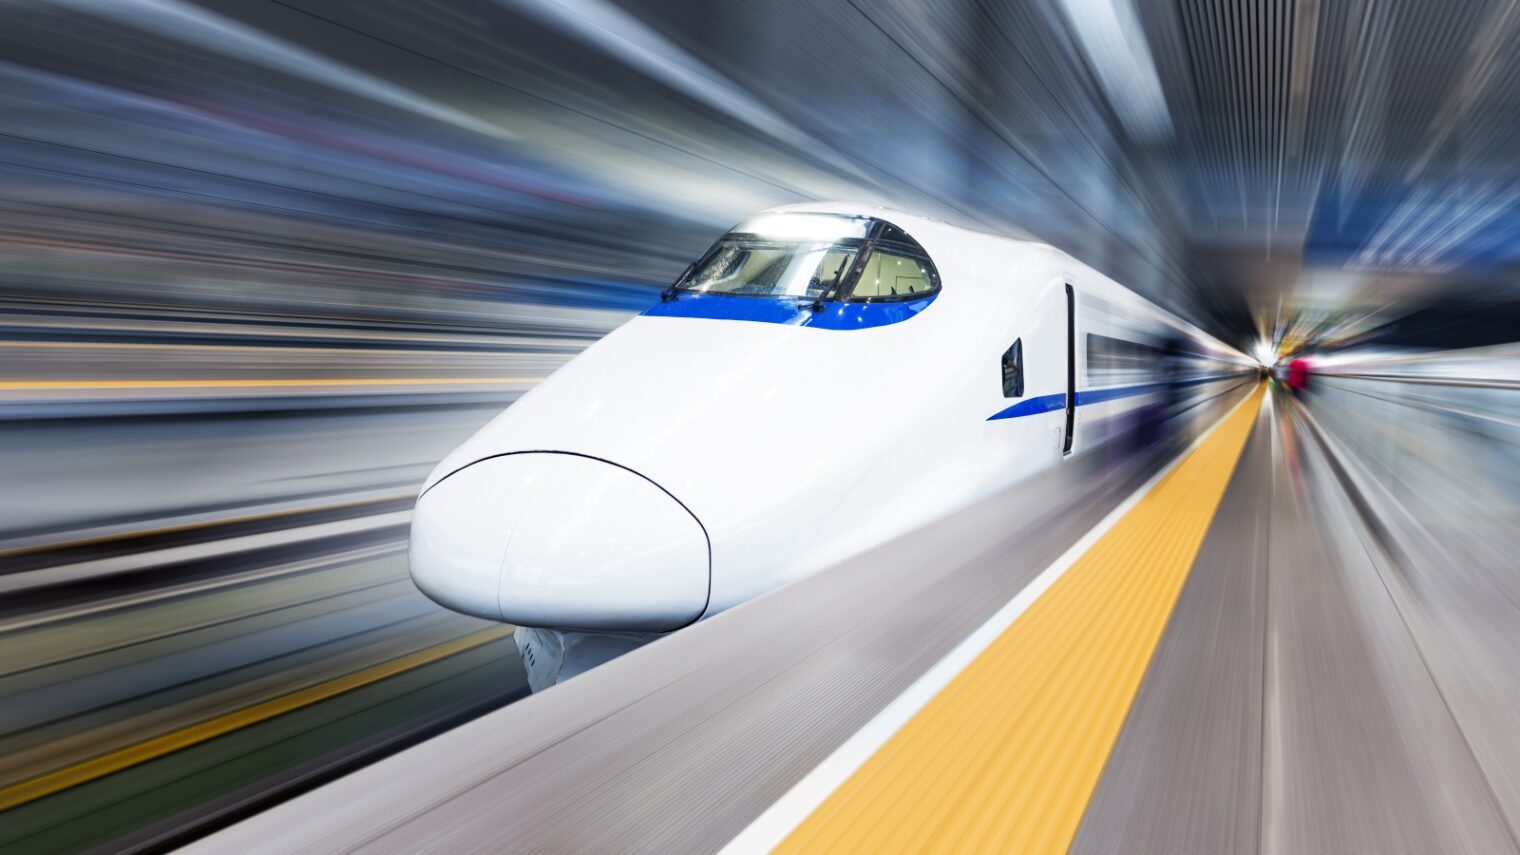 Image of high-speed rail travel via Shutterstock.com